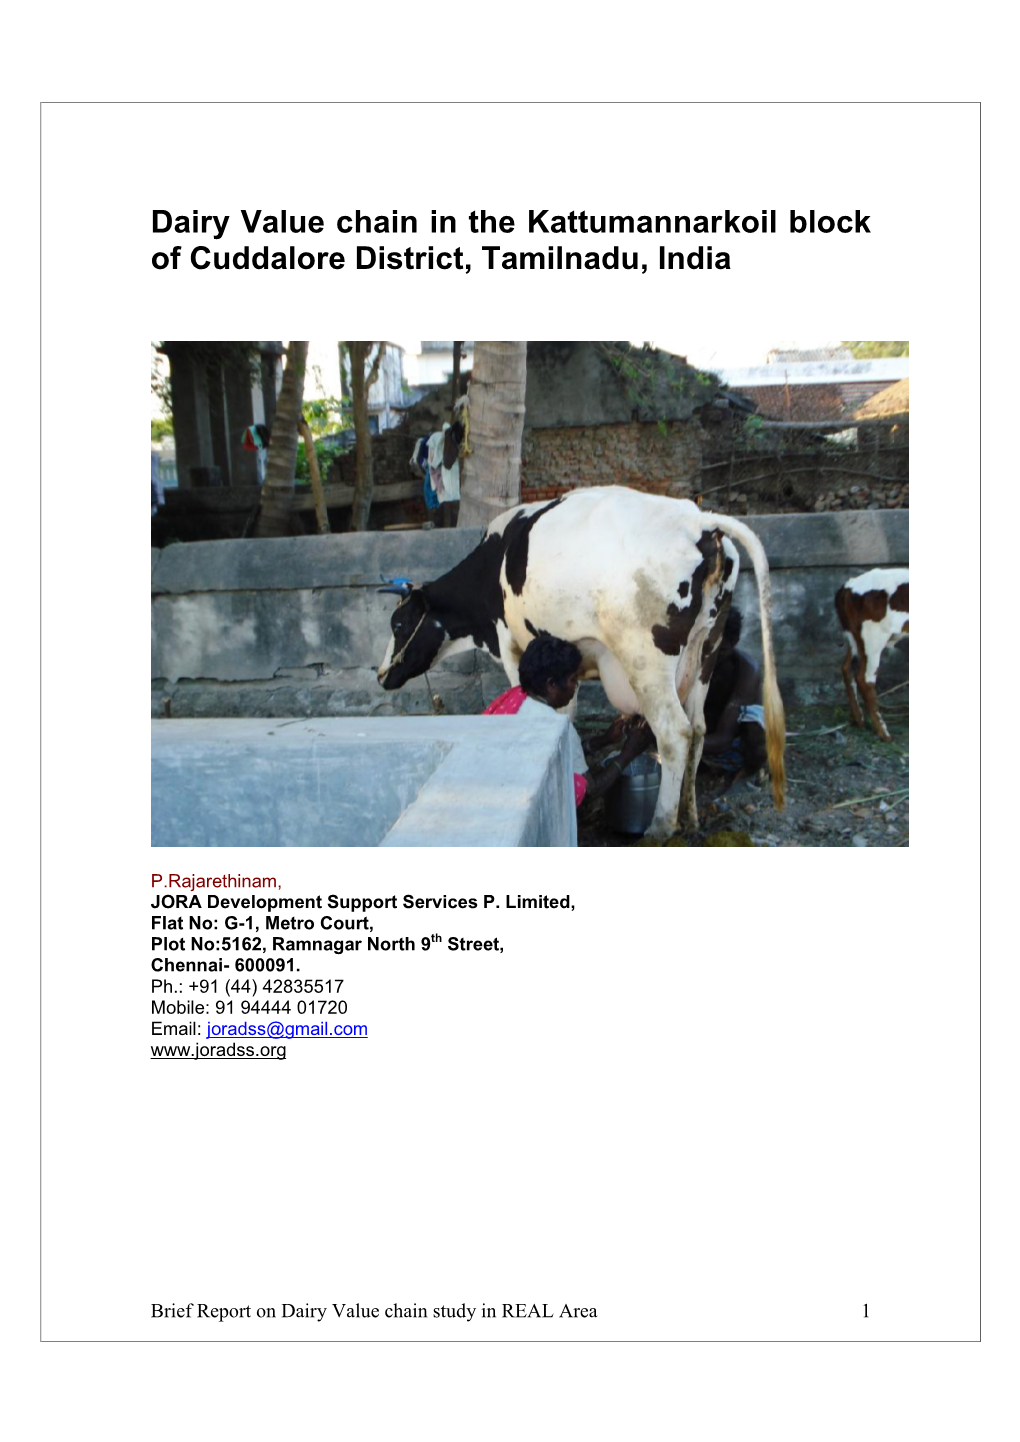 Dairy Value Chain in the Kattumannarkoil Block of Cuddalore District, Tamilnadu, India